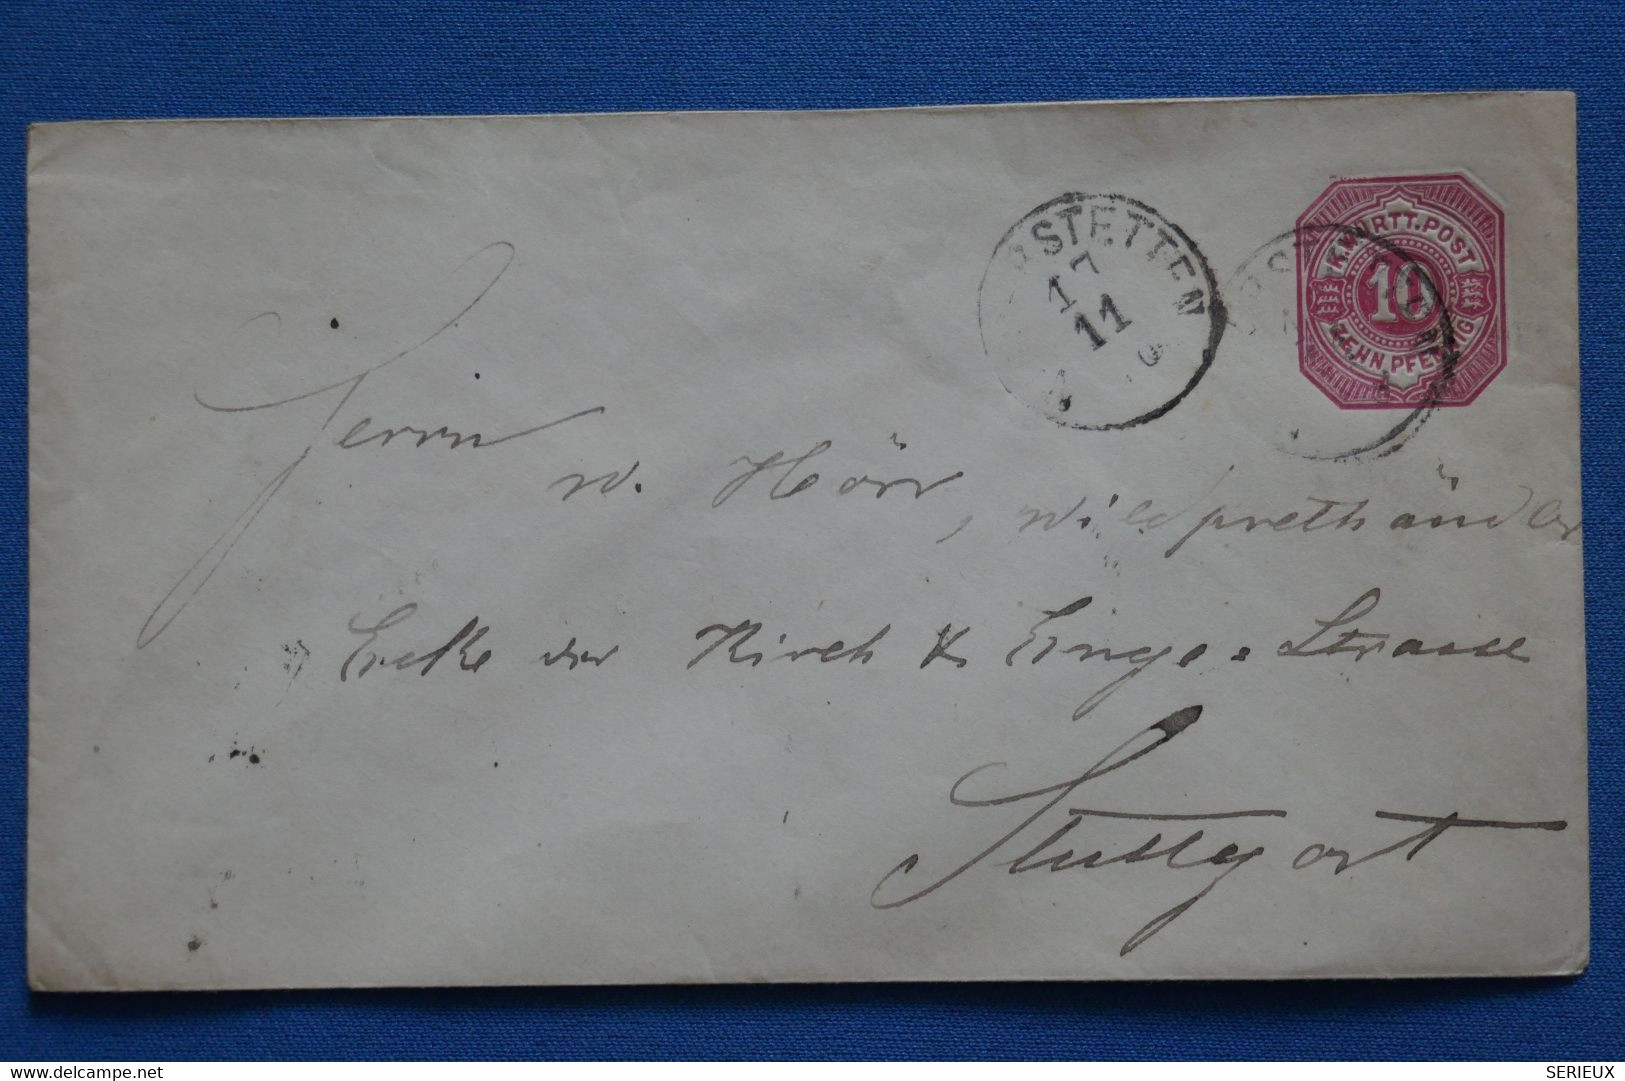 U19 WUTTENBERG BELLE LETTRE RARE 1880 POUR STUTTGART + AFFRANCHISSEMENT INTERESSANT - Postal  Stationery